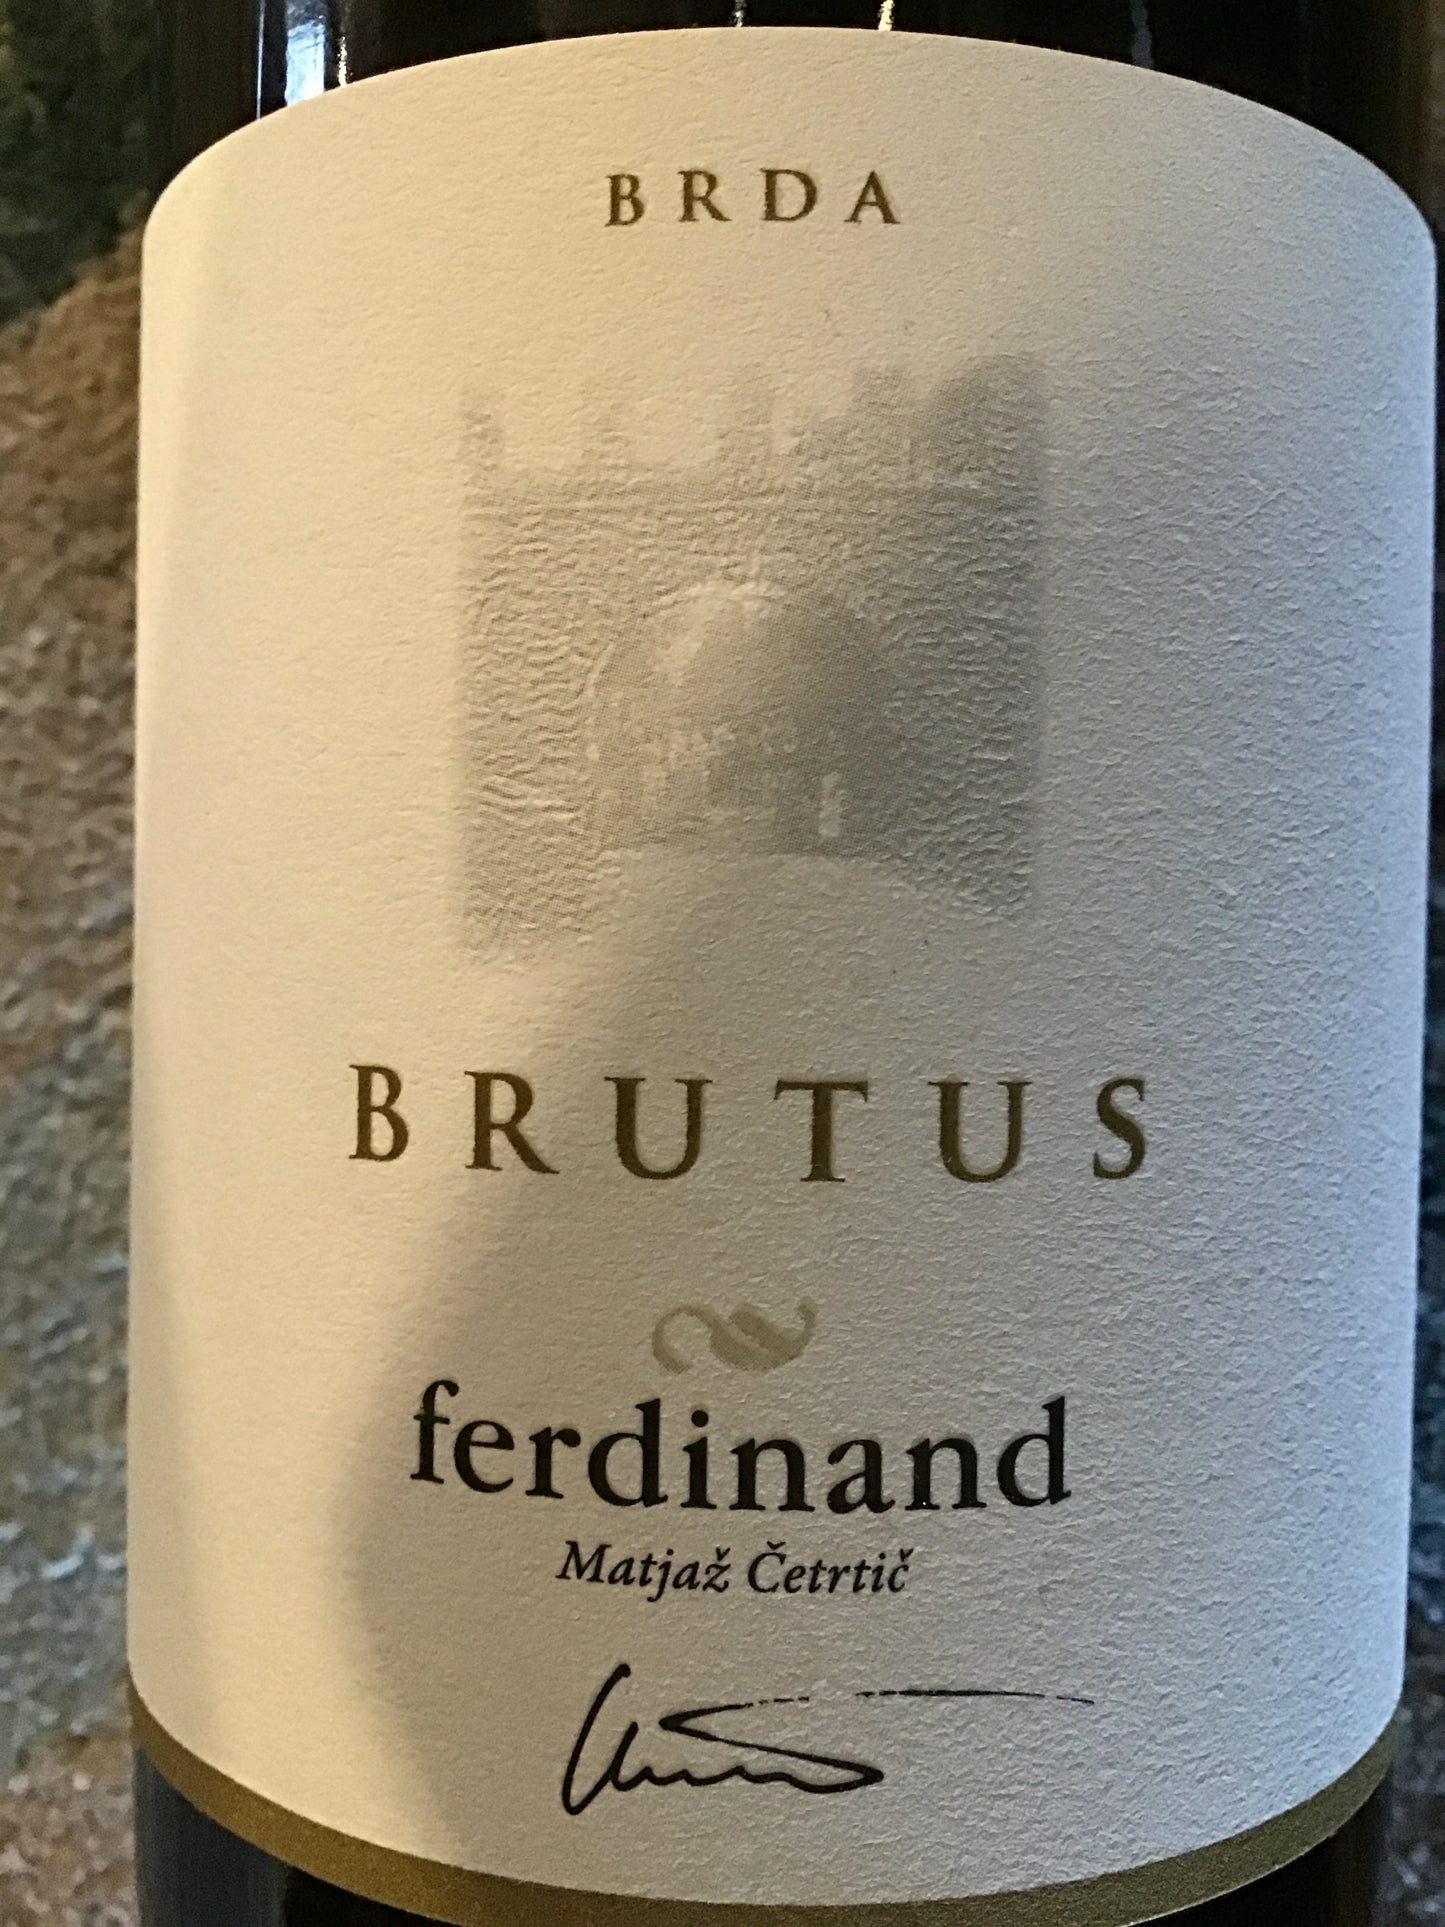 Ferdinand 'Brutus' - Rebula - Brda